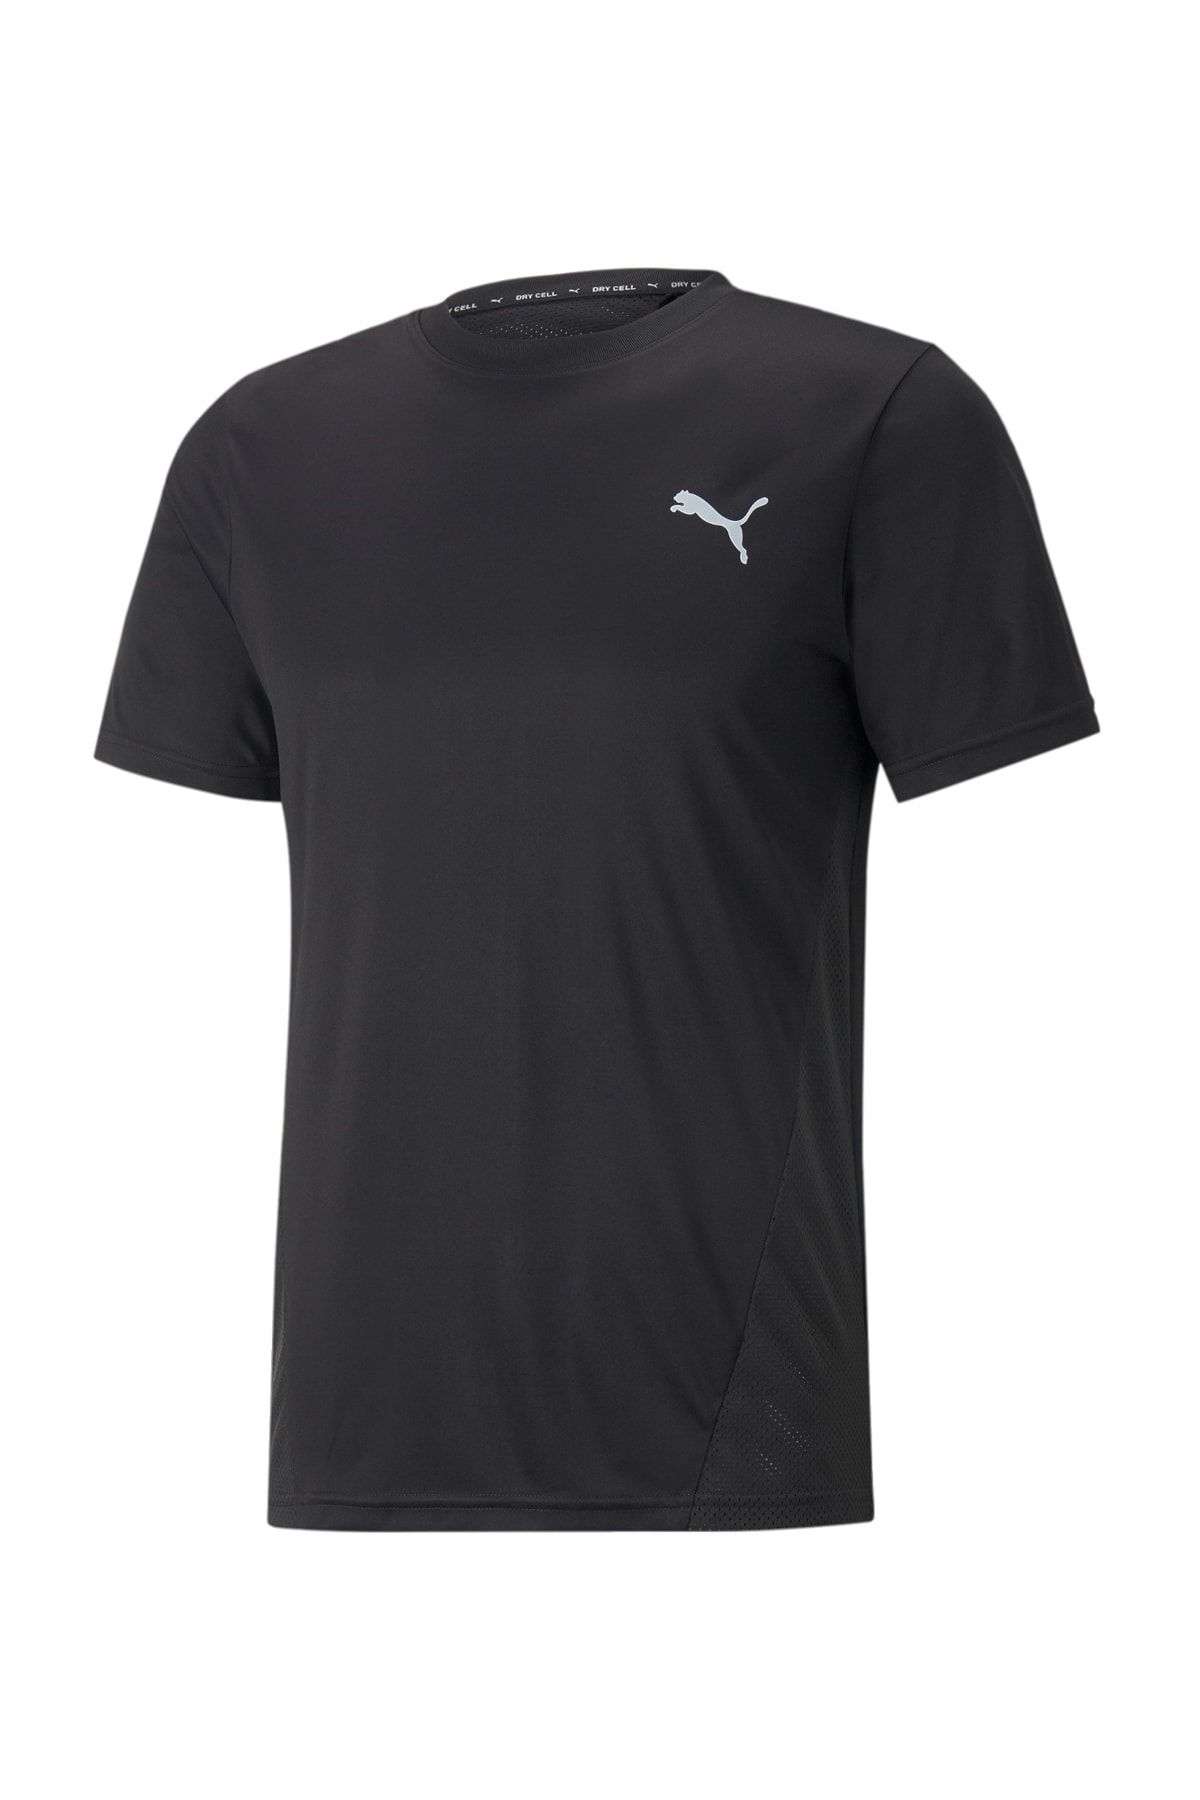 Puma T-Shirt - Schwarz - Fit Trendyol - Regular